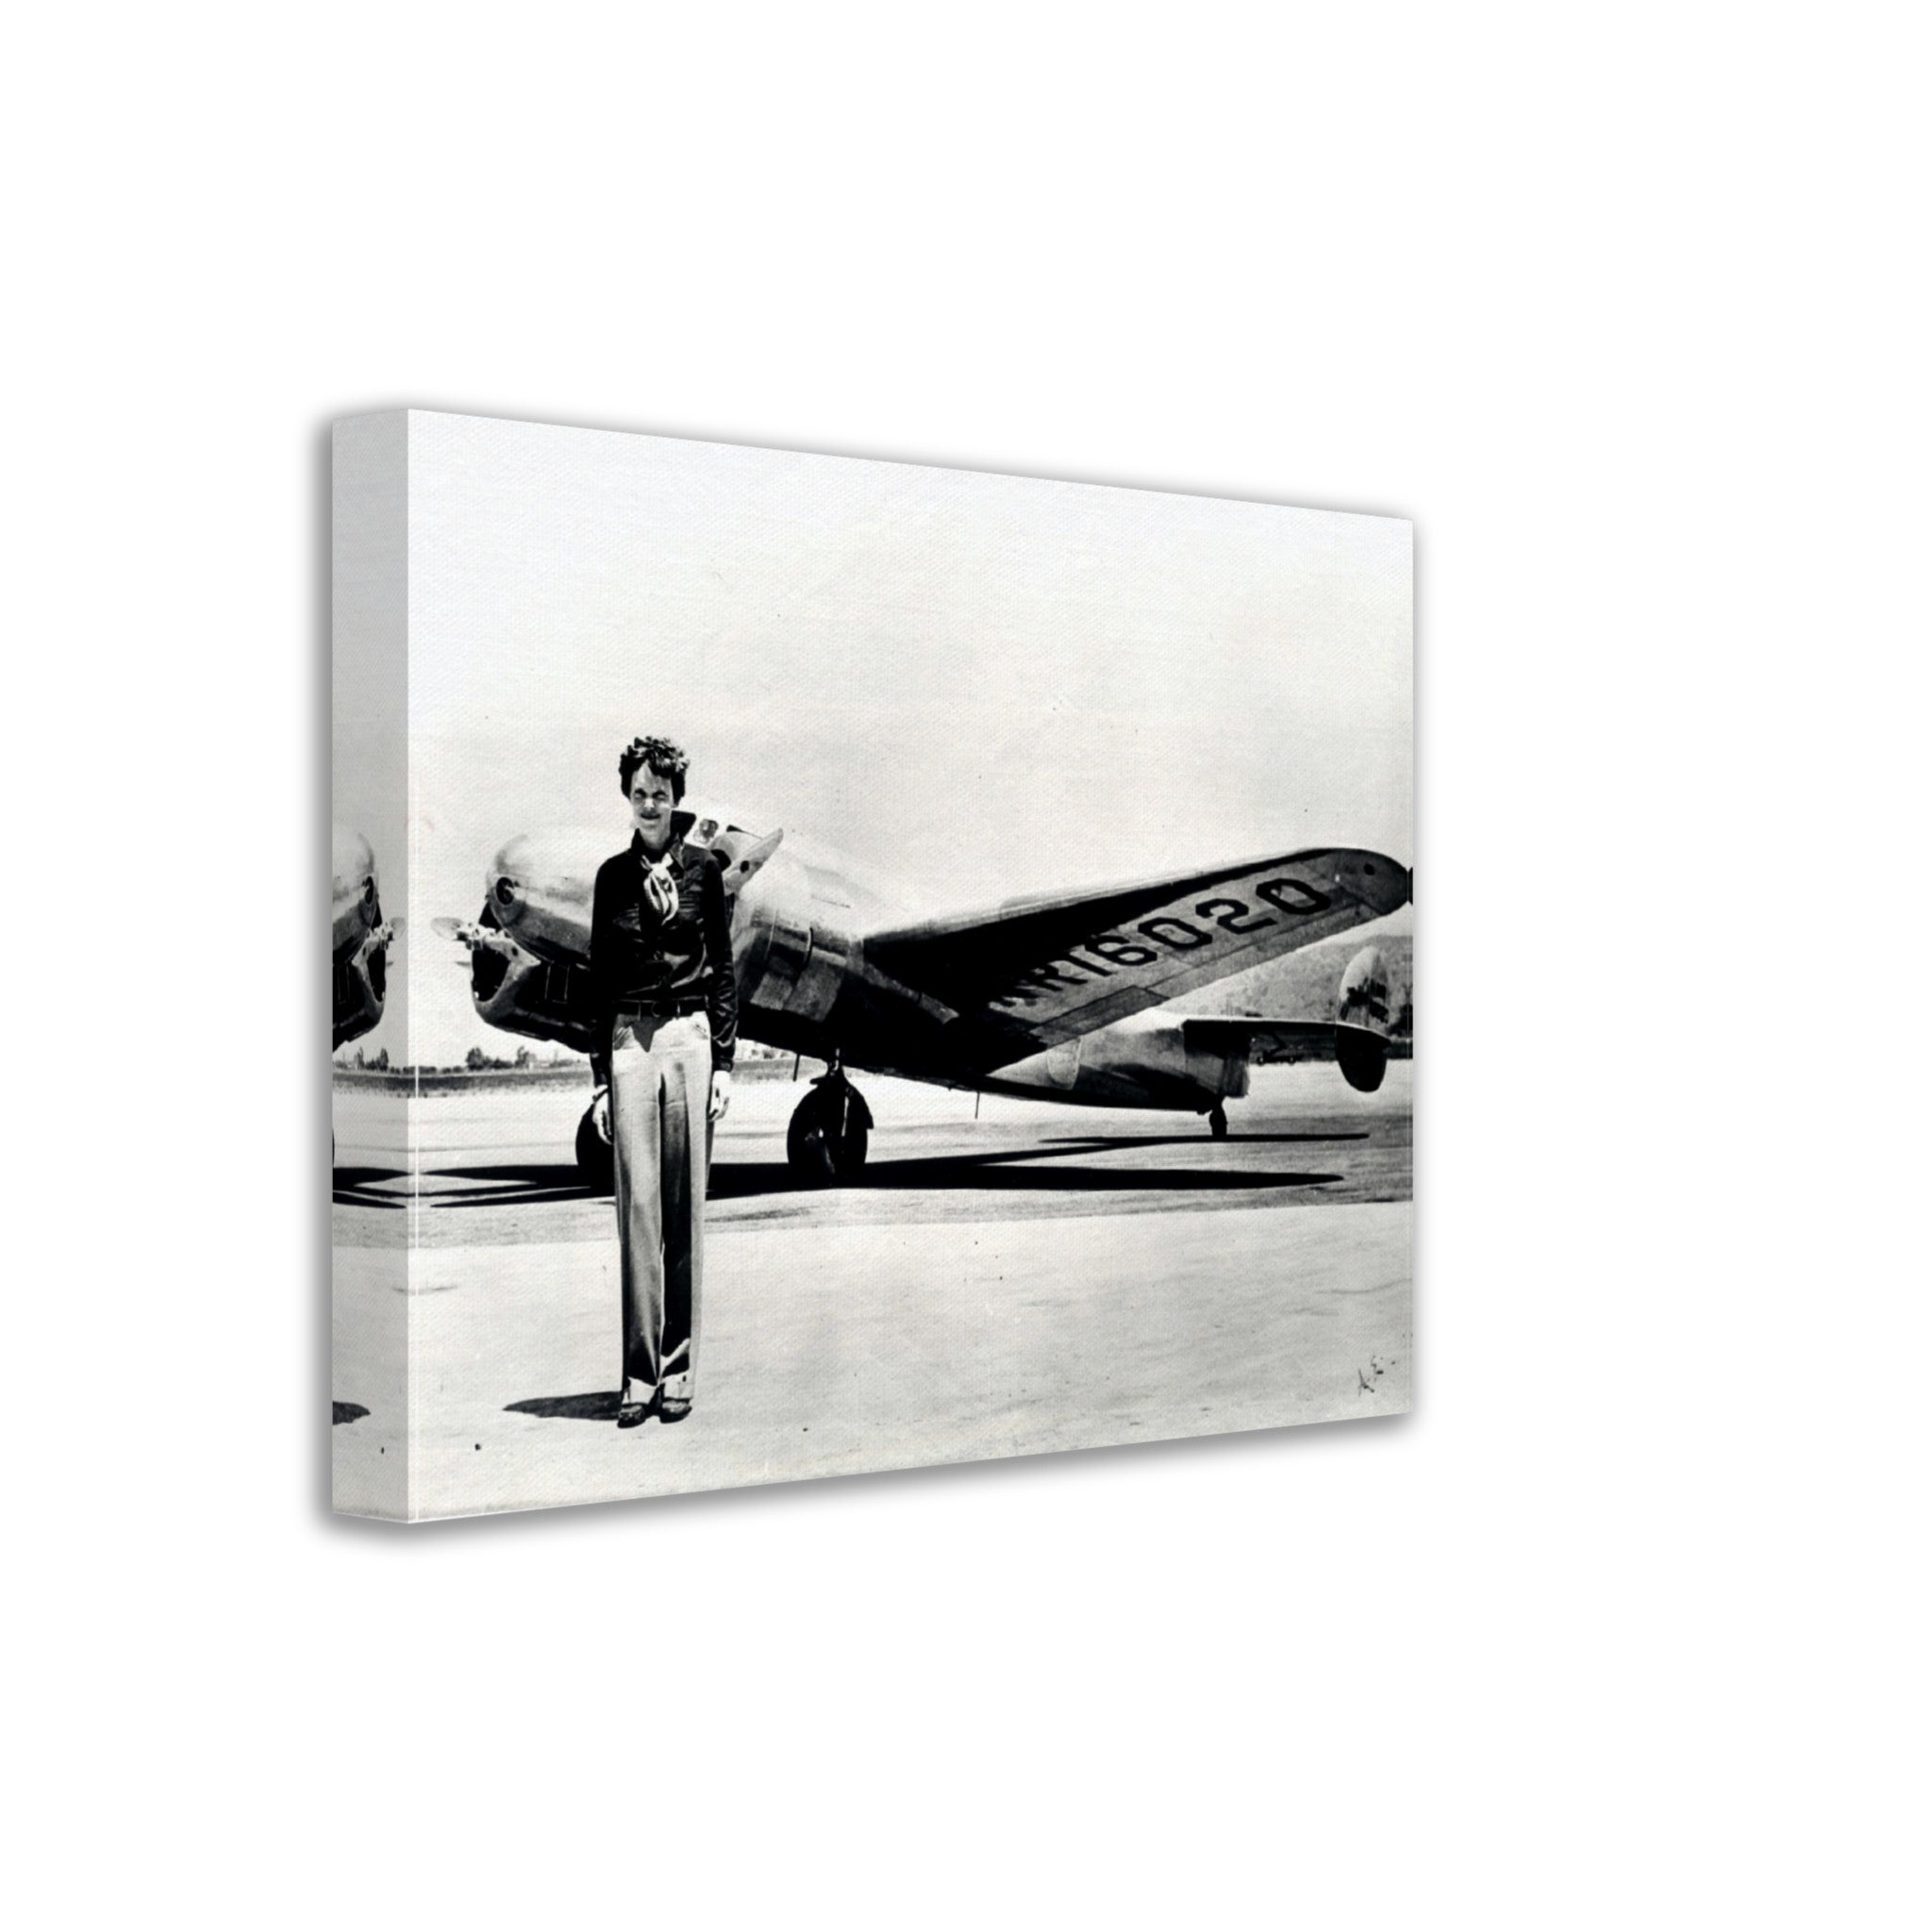 Amelia Earhart Canvas Print, With Plane She Disappeared In, Vintage Photo, Amelia Earhart Print - Legend Of Aviation - WallArtPrints4U